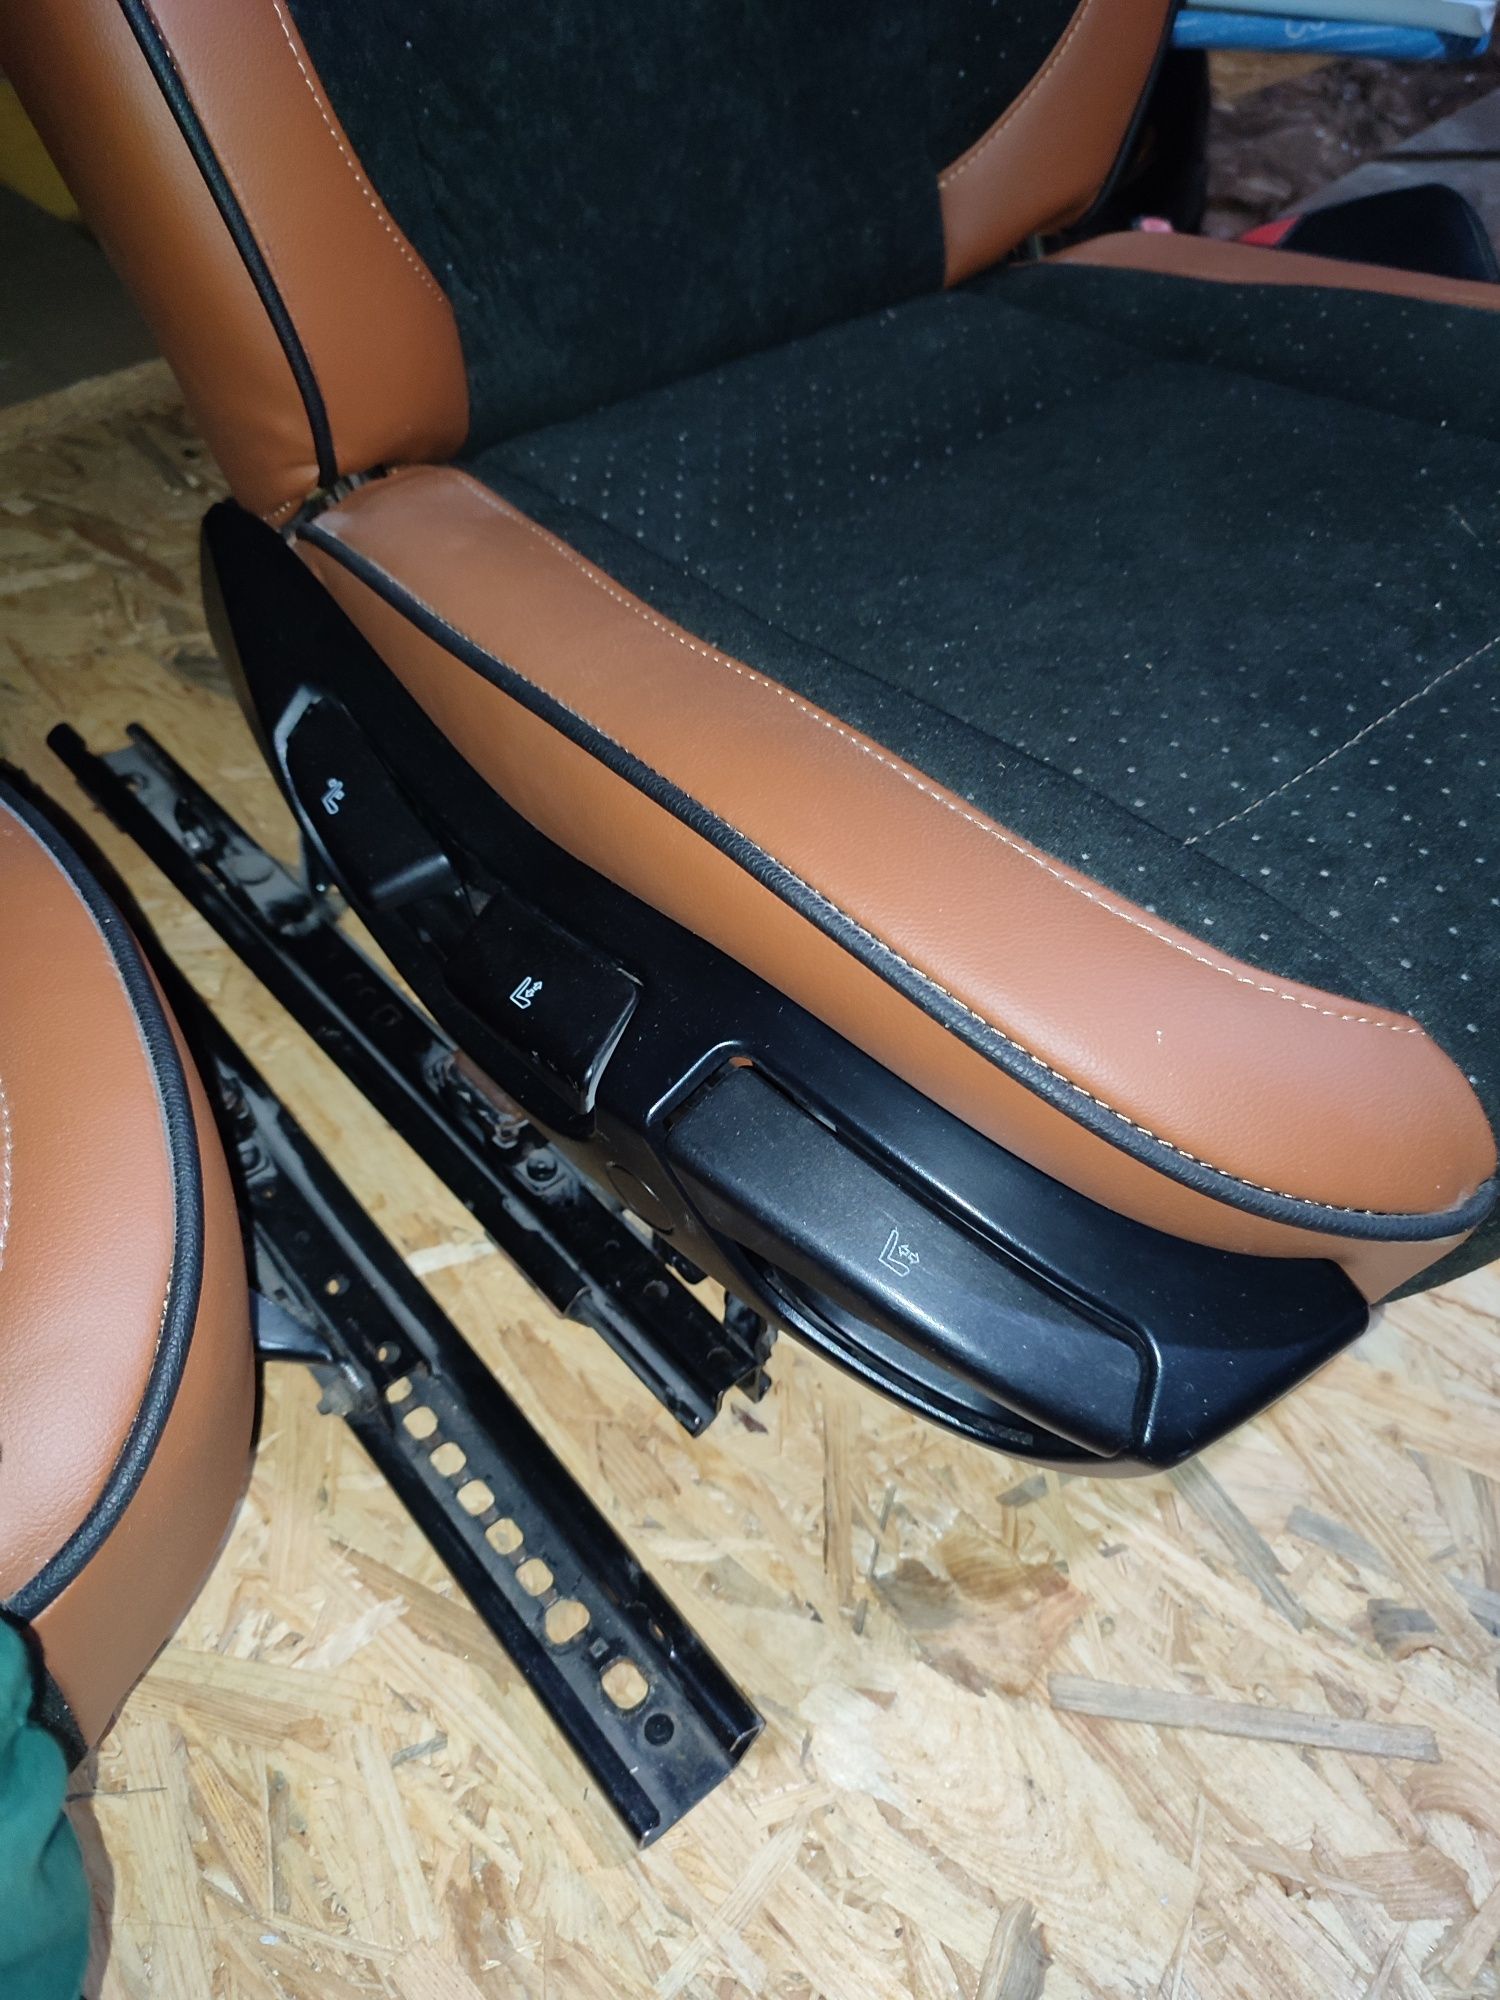 Fotele E46 Touring nowo obszyte alcantara, brązowa skóra